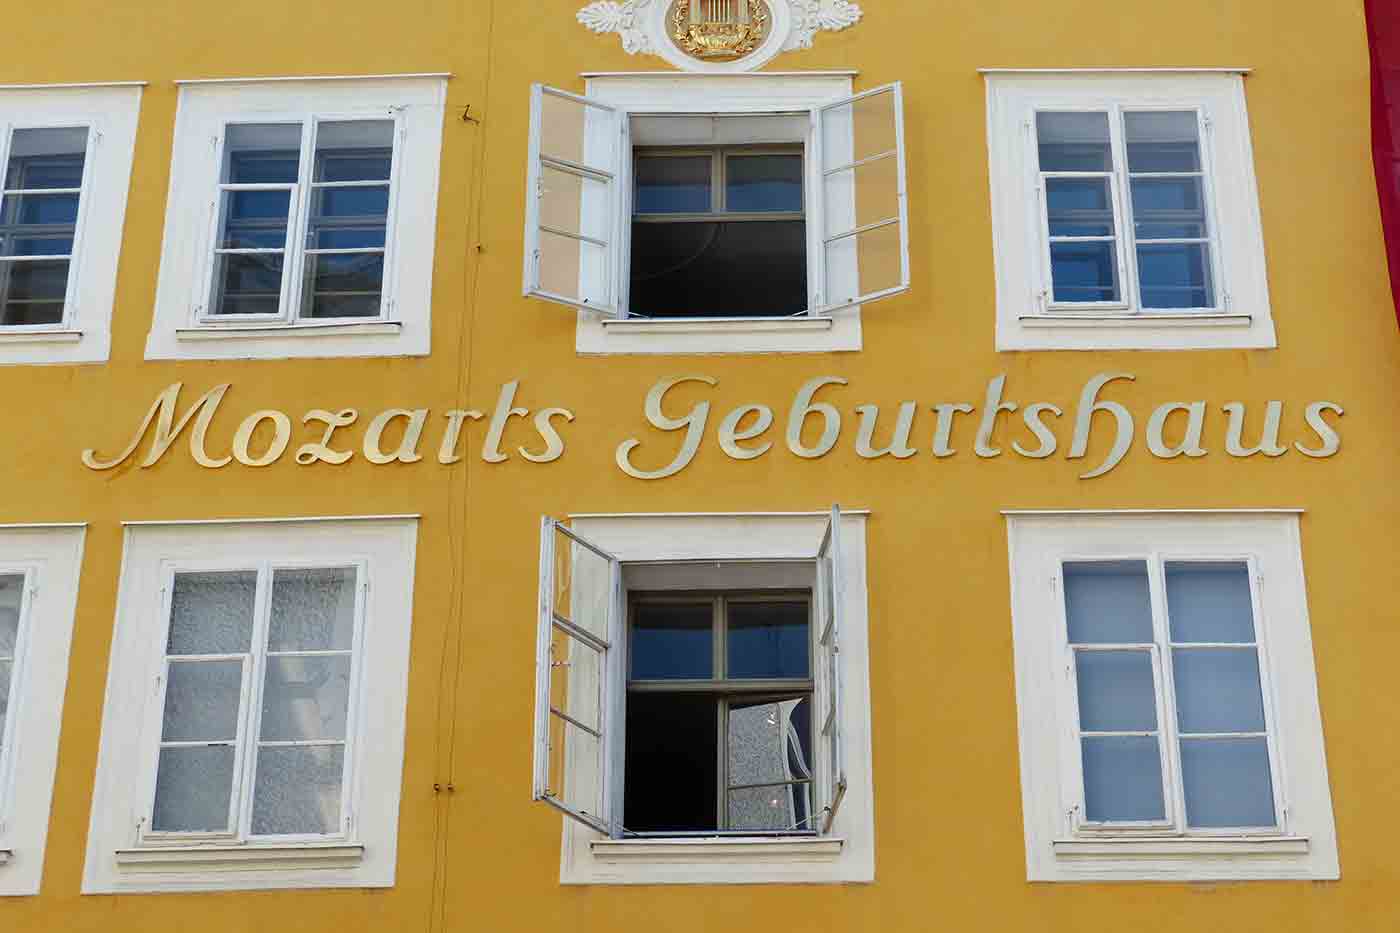 Mozart Birthplace